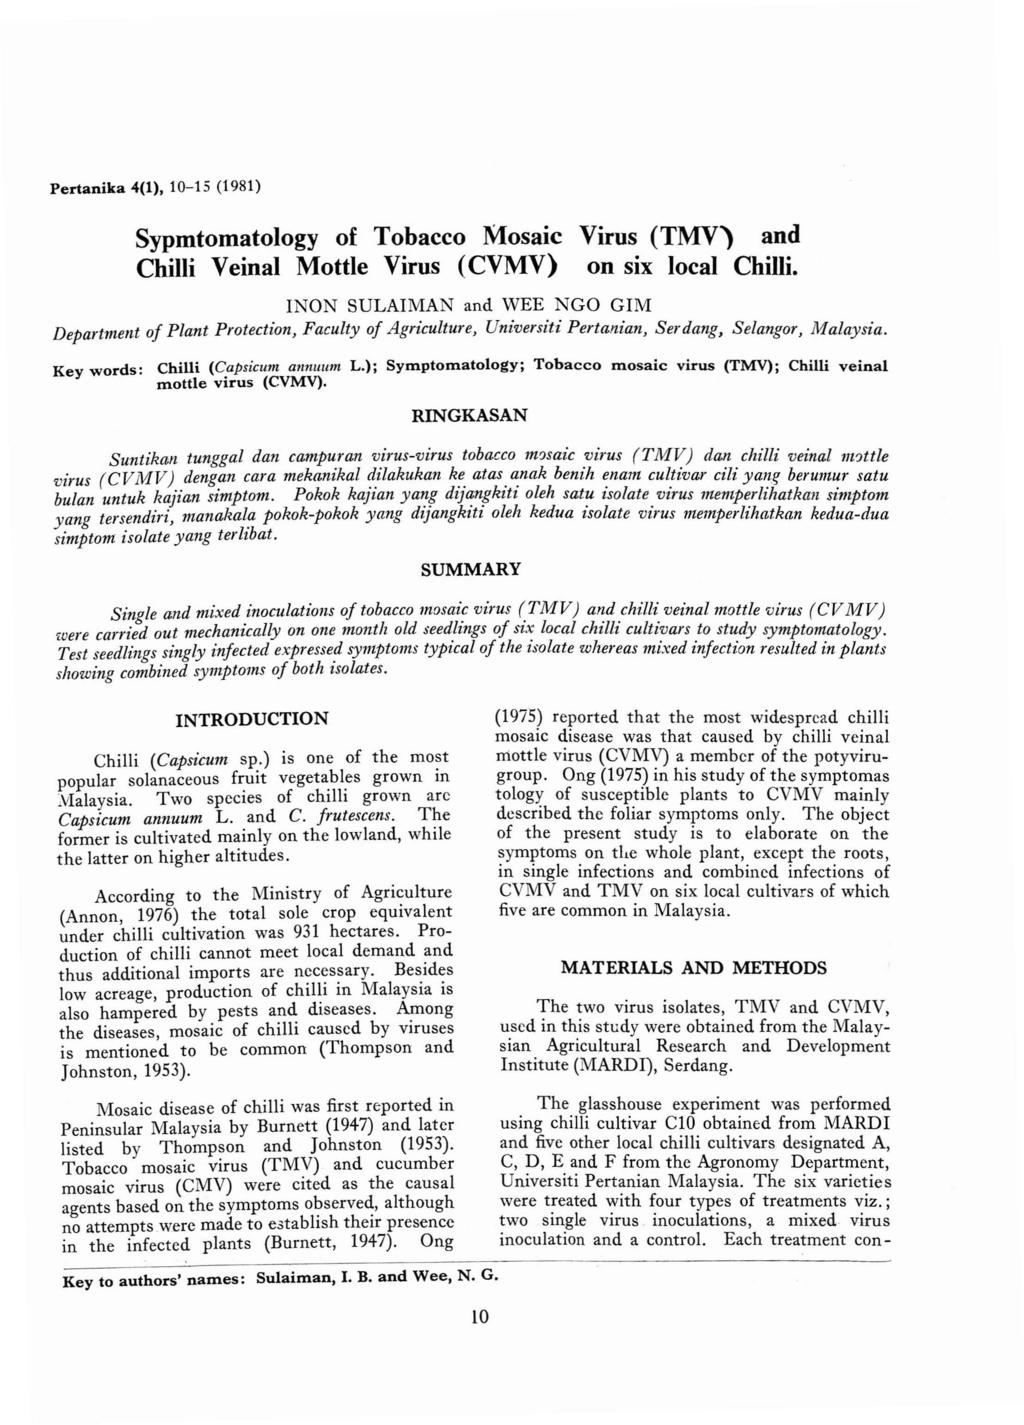 Pertanika 4(1), 10-15 (1981) Sypmtomatology of Tobacco Mosaic Virus (TMV) and Chilli Veinal Mottle Virus (CVMV) on six local Chilli.